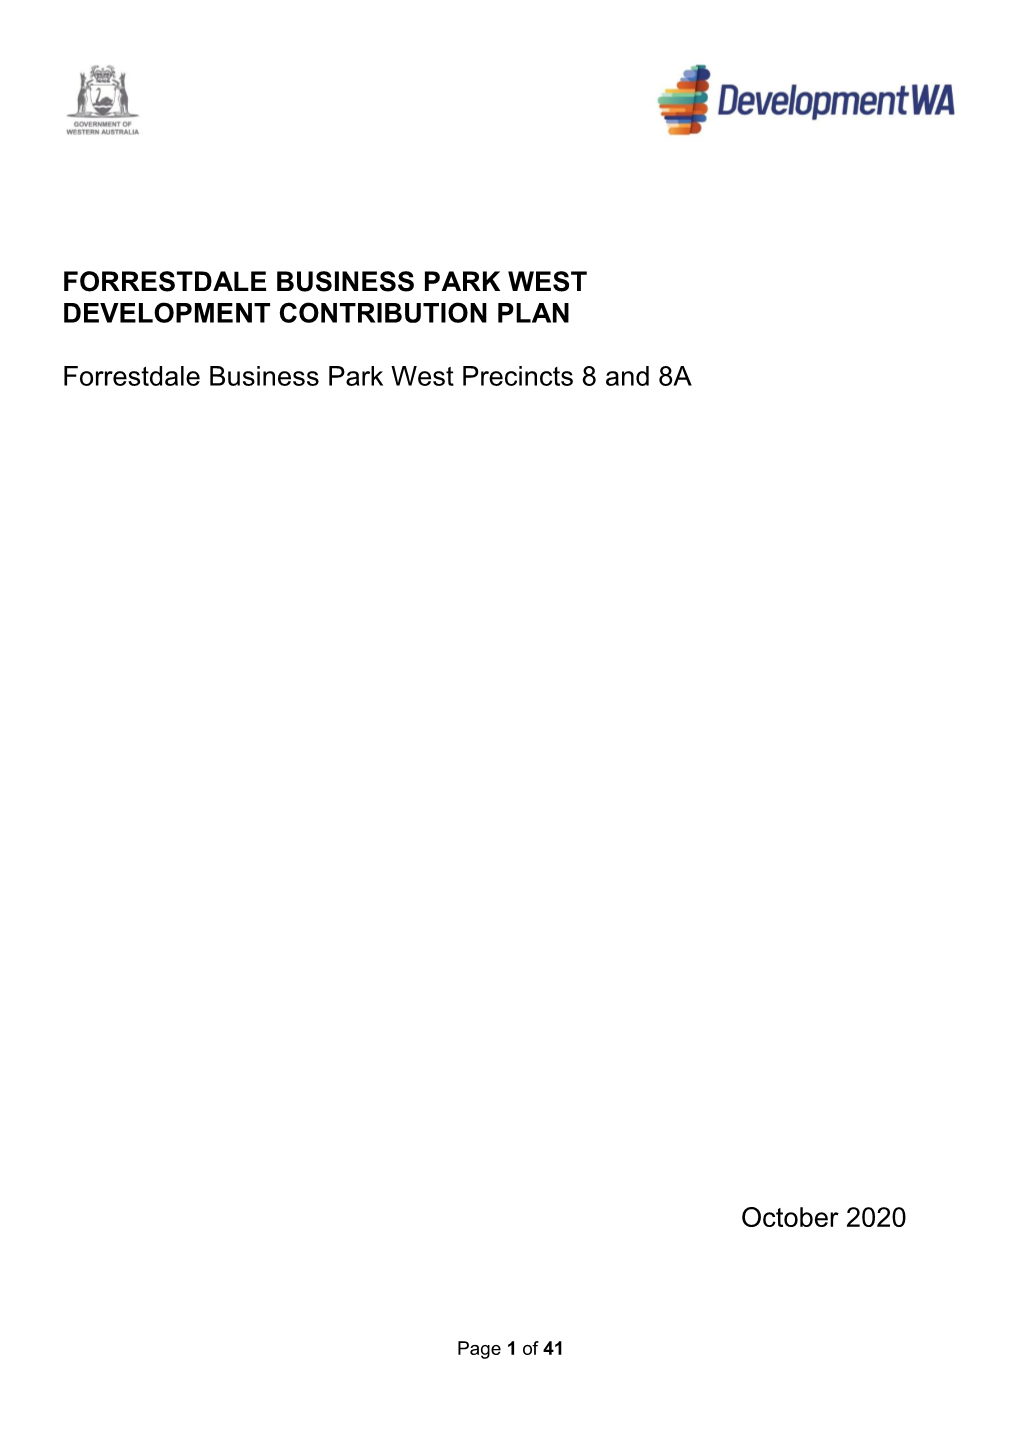 Forrestdale Business Park West Development Contribution Plan